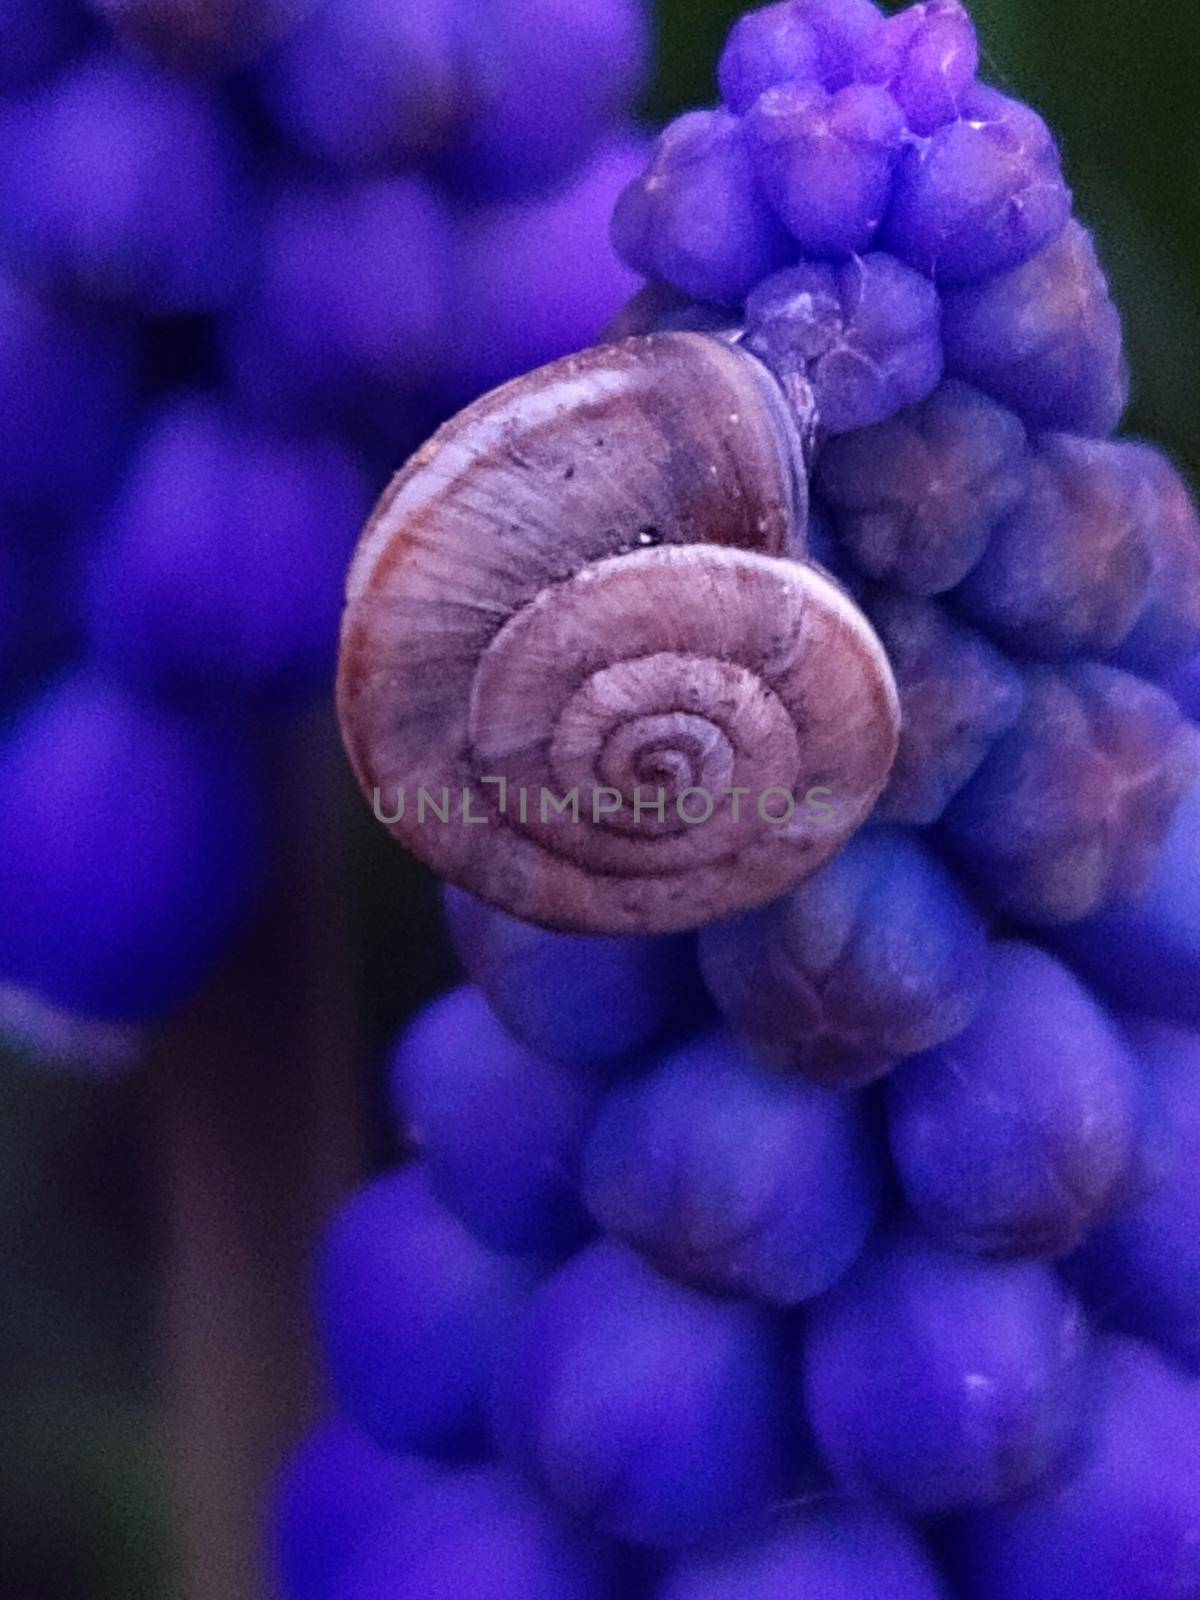 Grape snail on armenian muscari flowers close up.